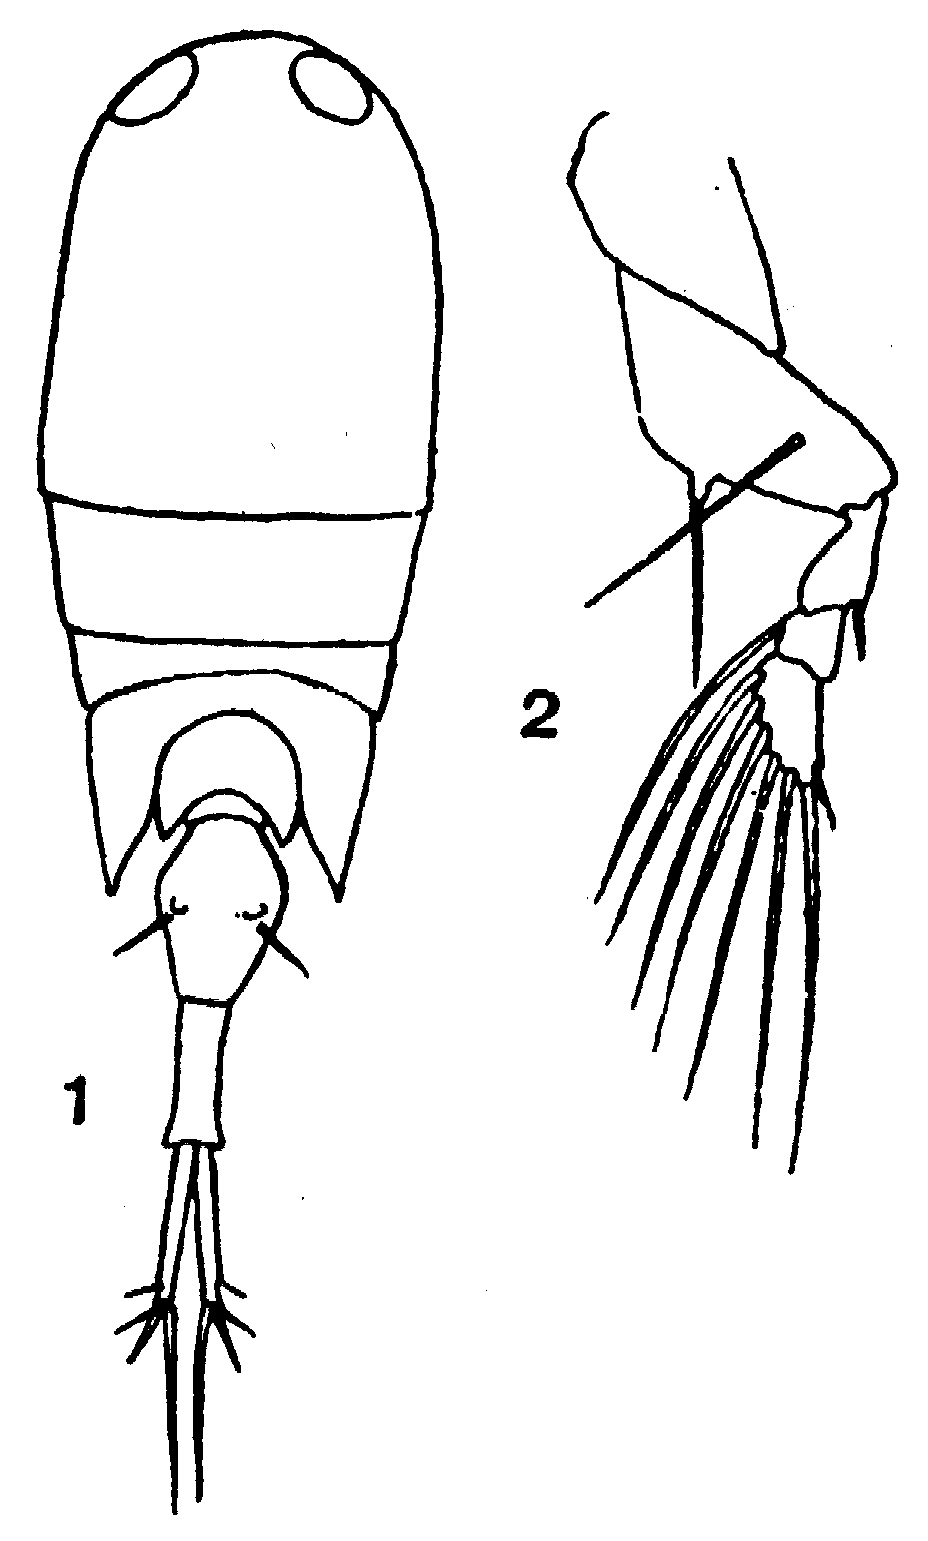 Espce Corycaeus (Onychocorycaeus) agilis - Planche 16 de figures morphologiques